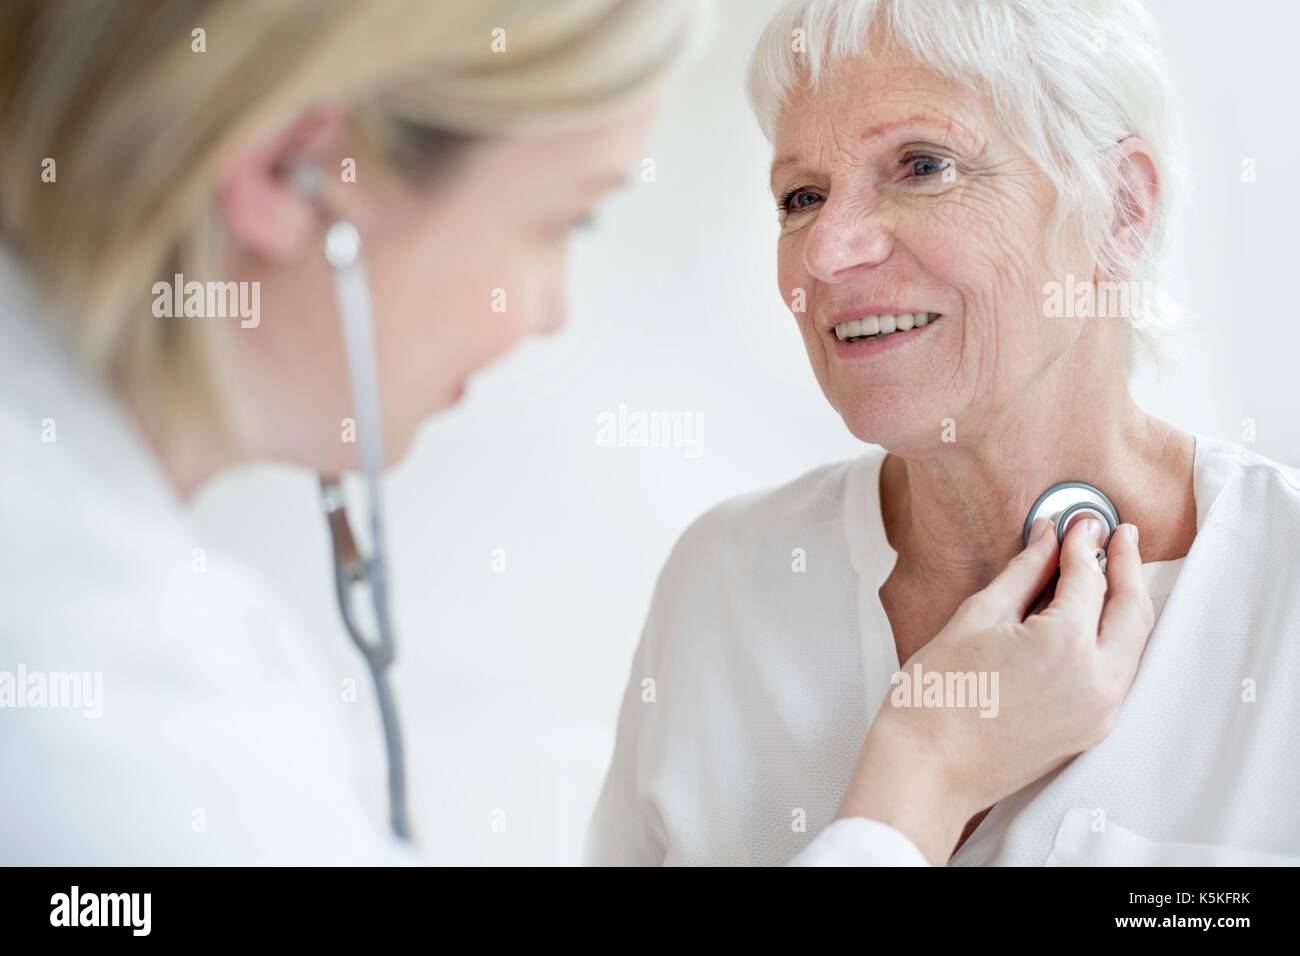 Female doctor examining senior woman. Stock Photo